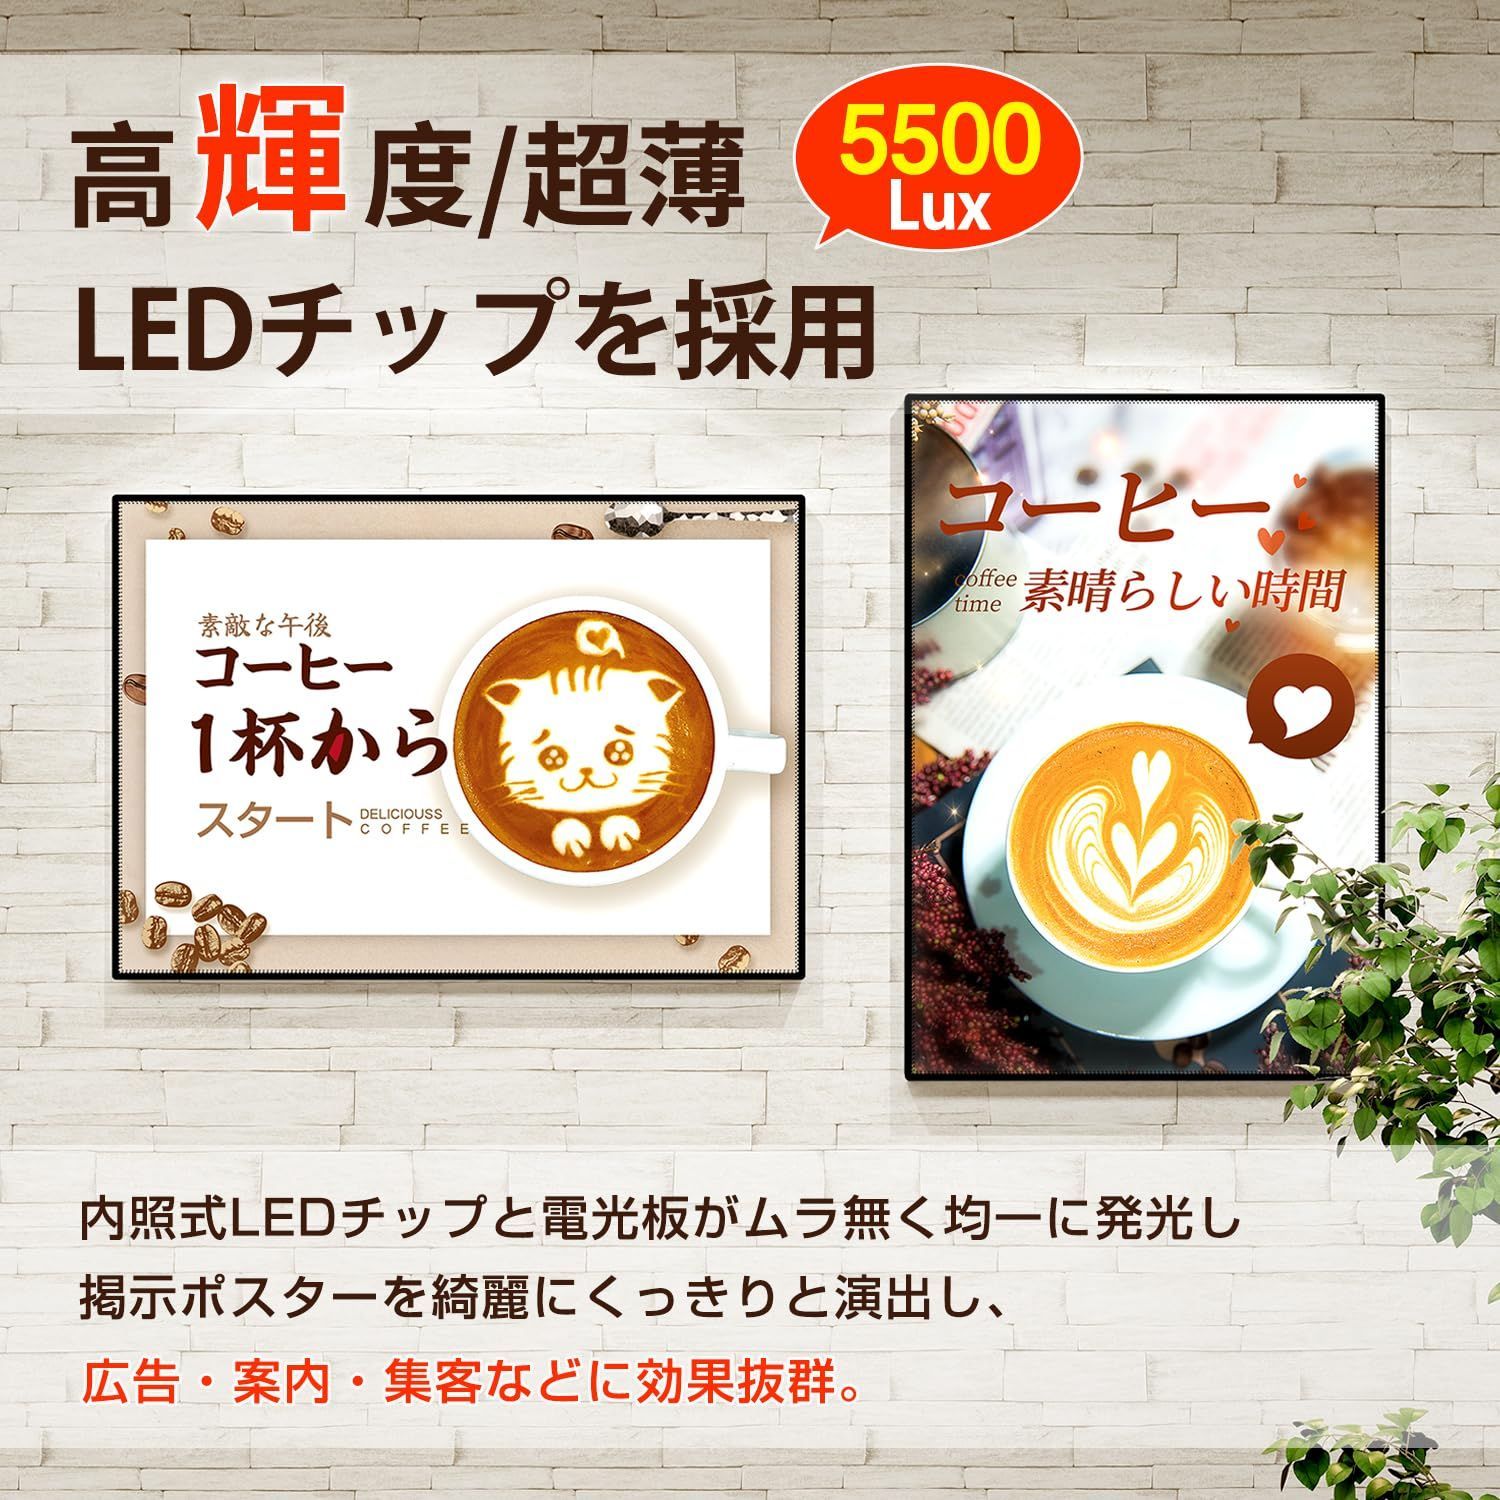 ICHIYO LEDポスターパネル 店舗用看板 高輝度5500Lux 薄型 卓上 ゆとり雑貨店 メルカリ